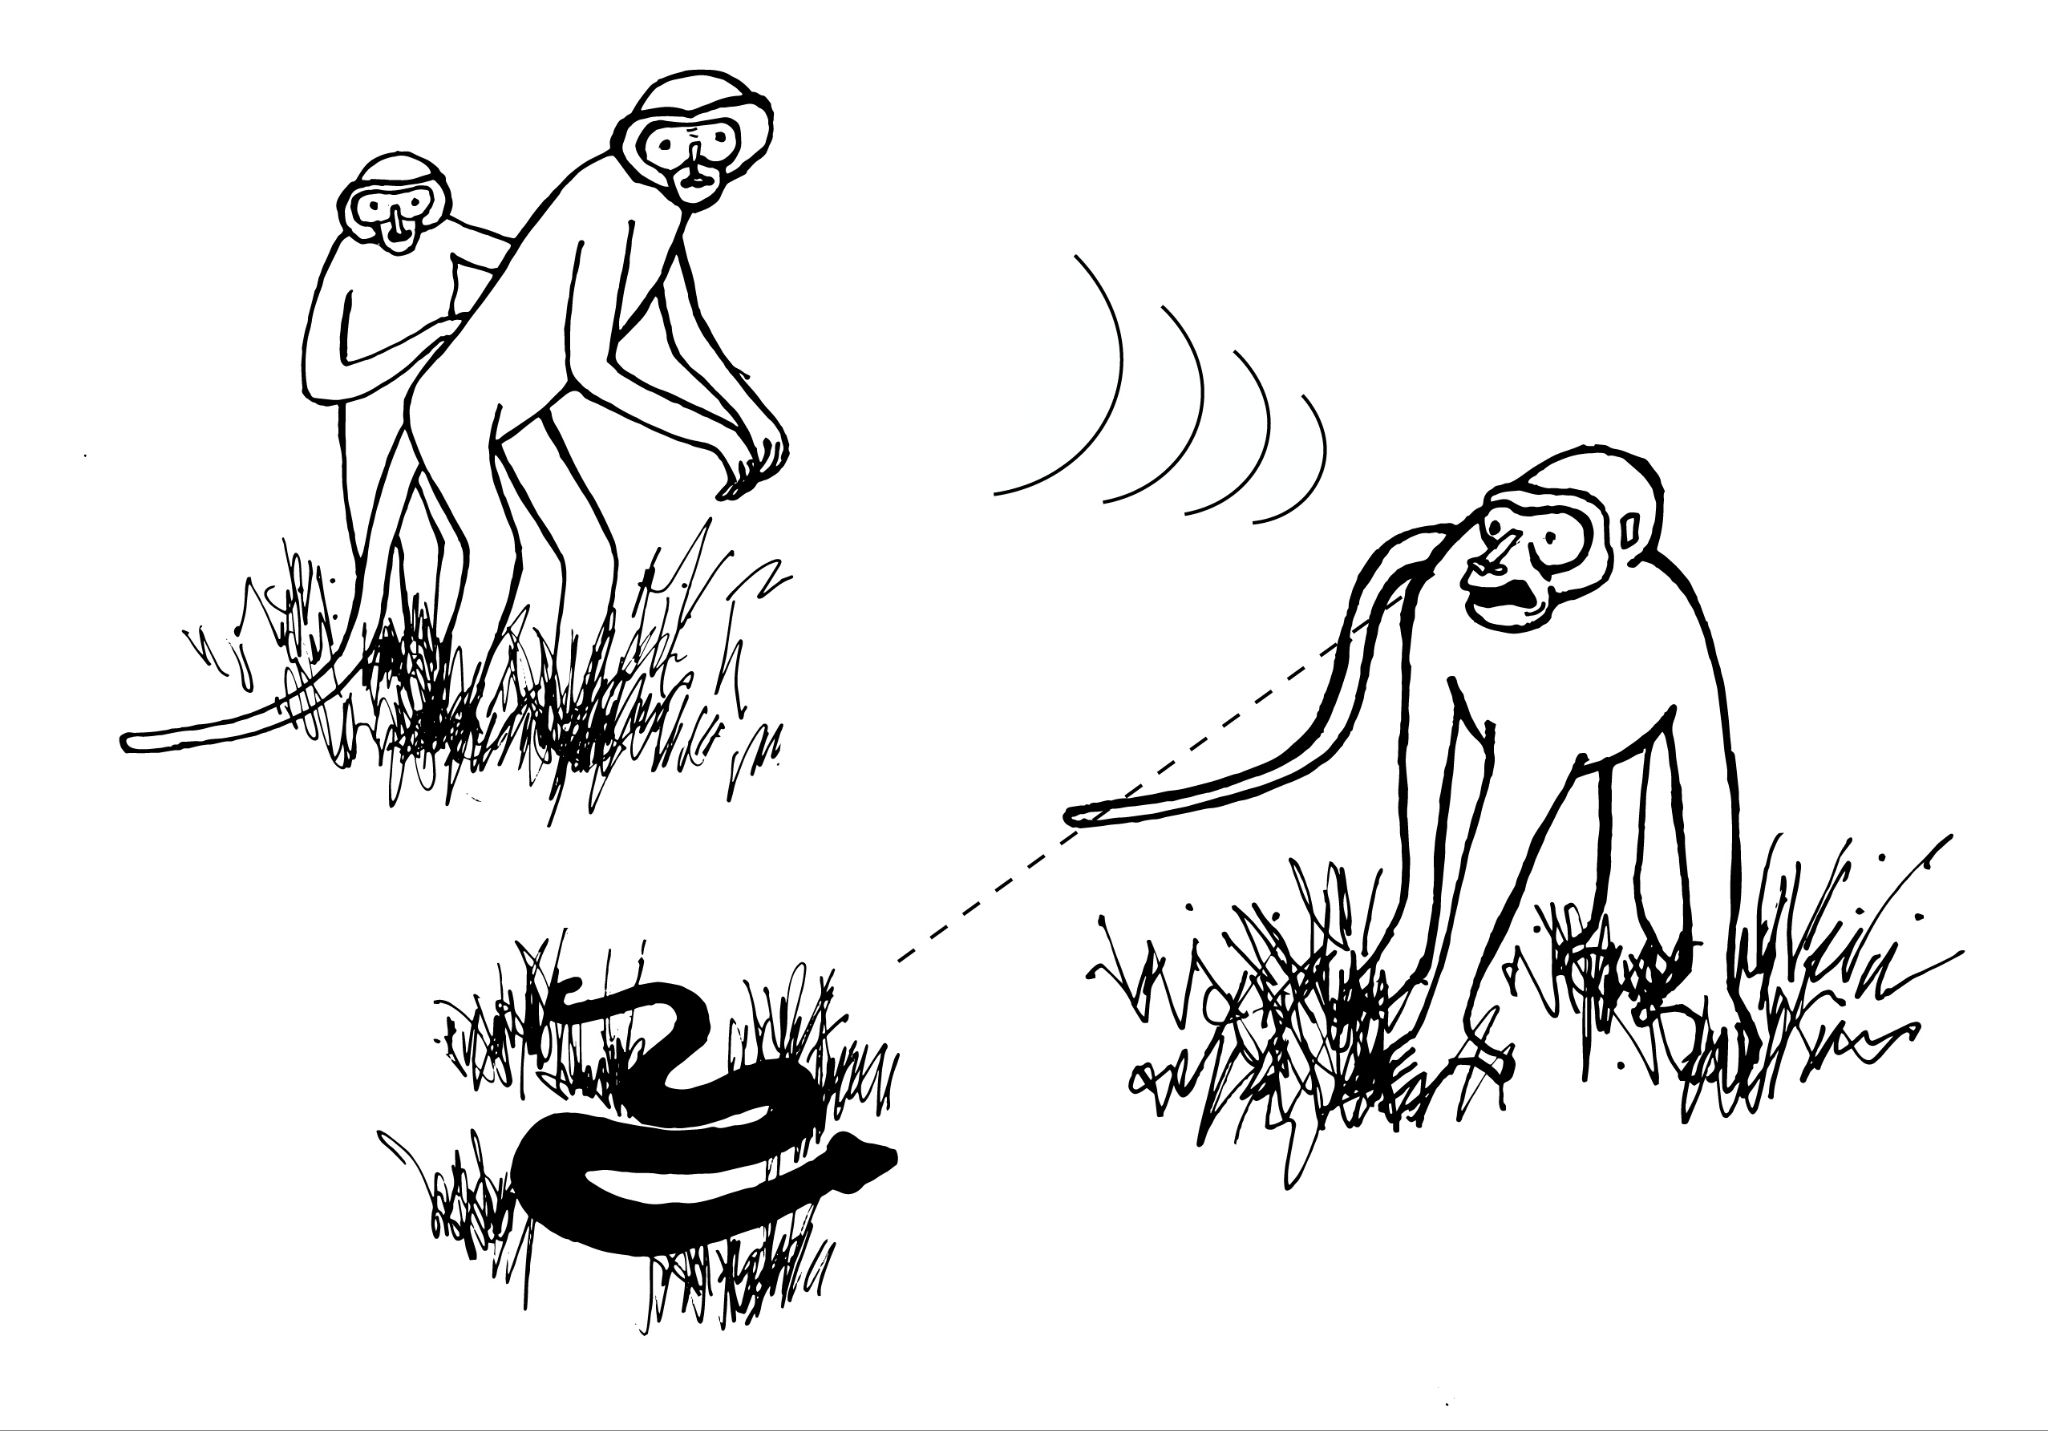 Primate views snake on the ground.